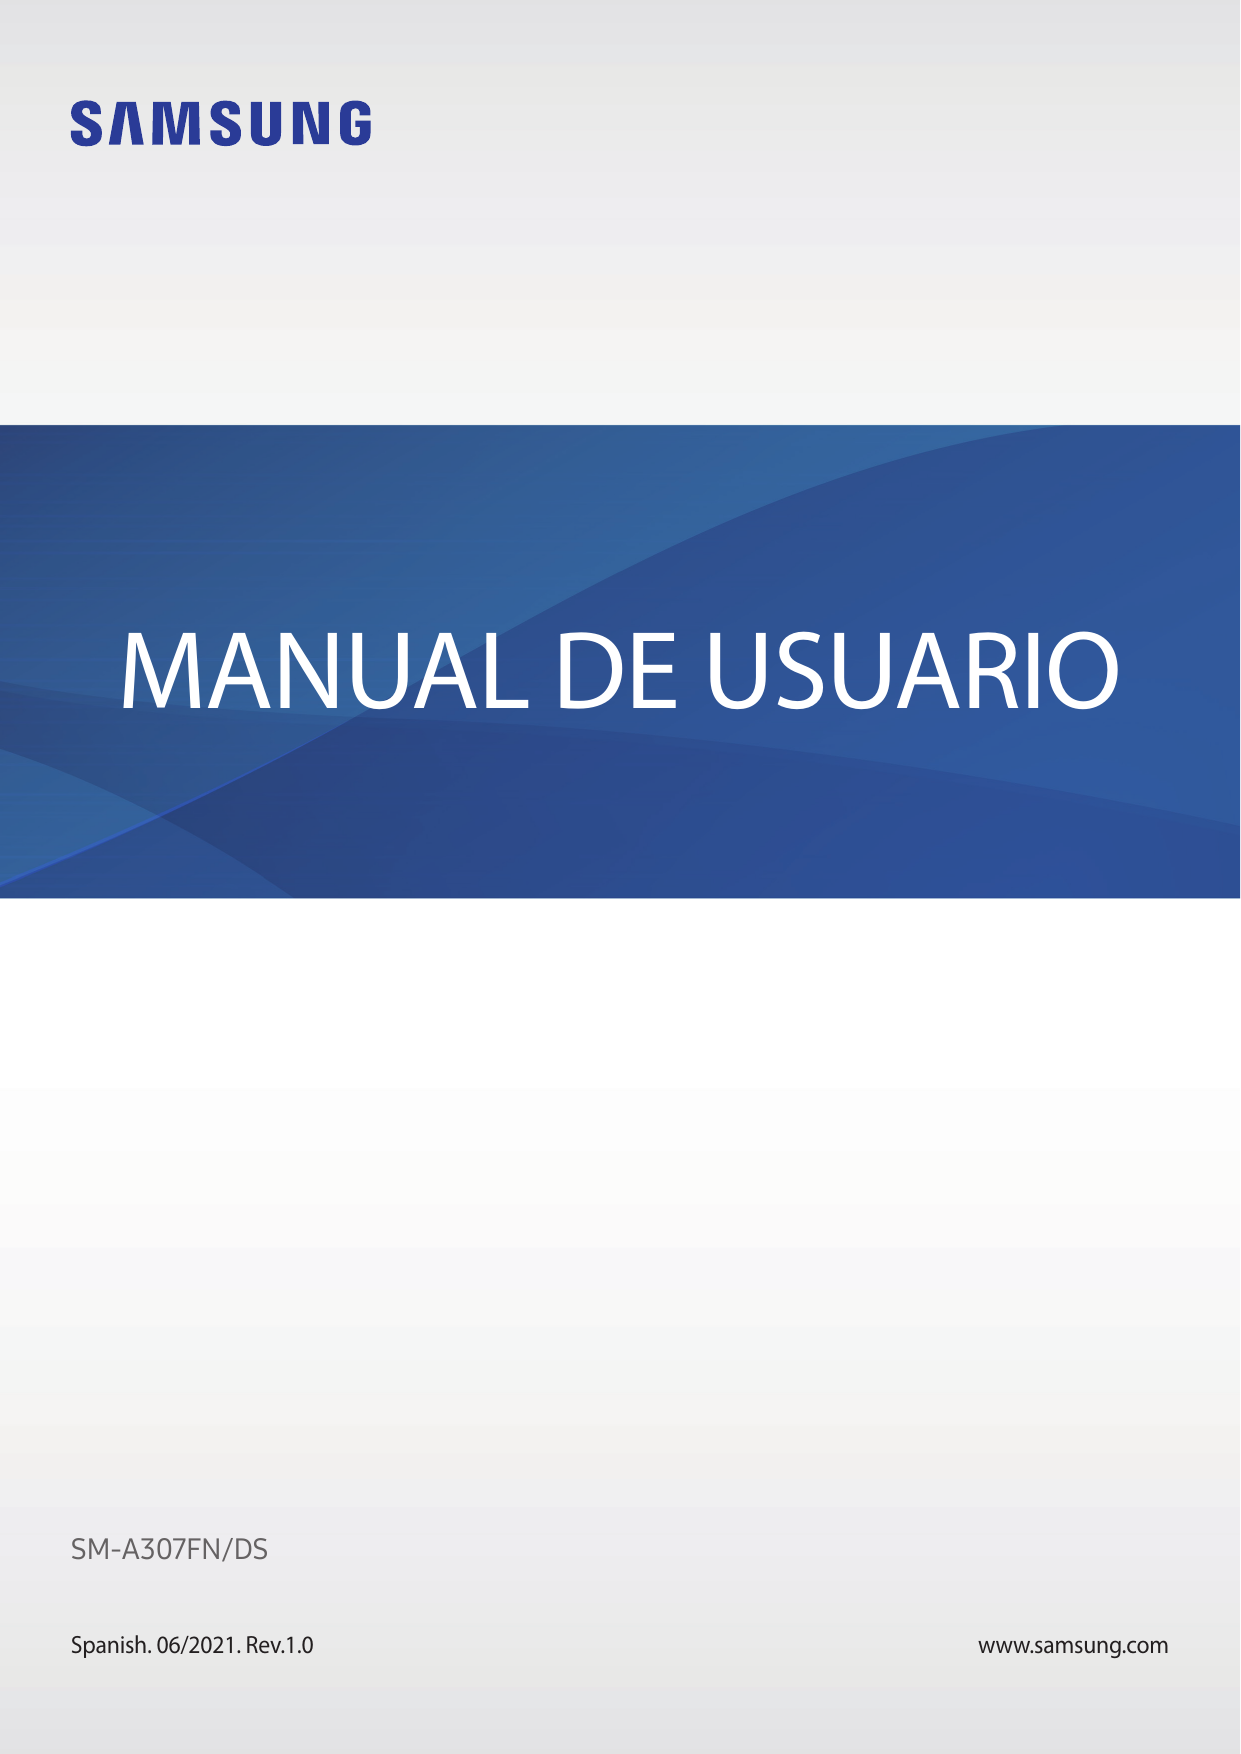 MANUAL DE USUARIOSM-A307FN/DSSpanish. 06/2021. Rev.1.0www.samsung.com